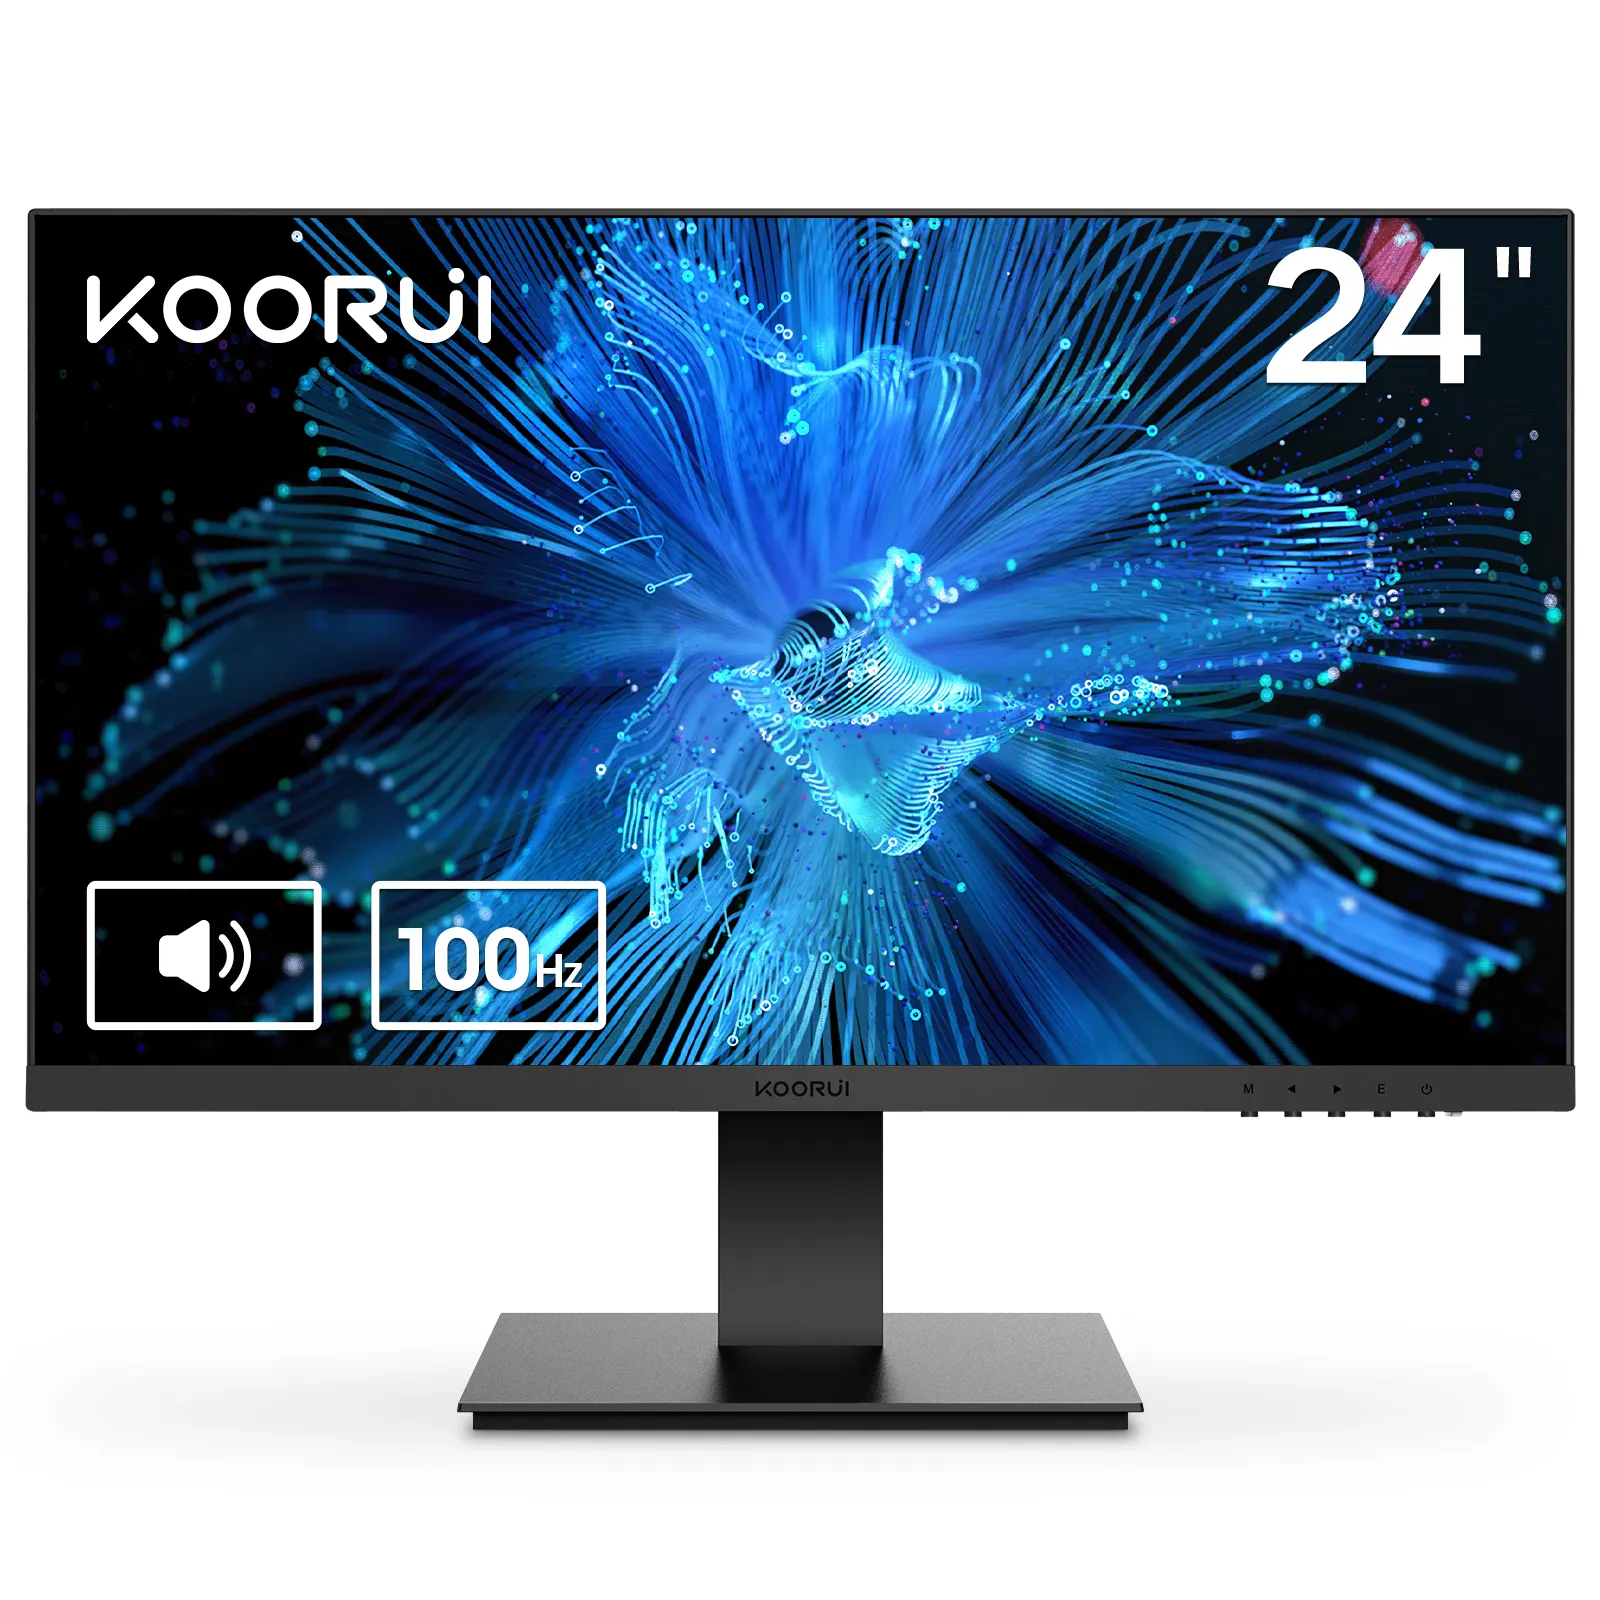 Koorui- pc 24 inch monitor desktop hd hkc 1080p frameless screen 100hz rgb pc computer display factory